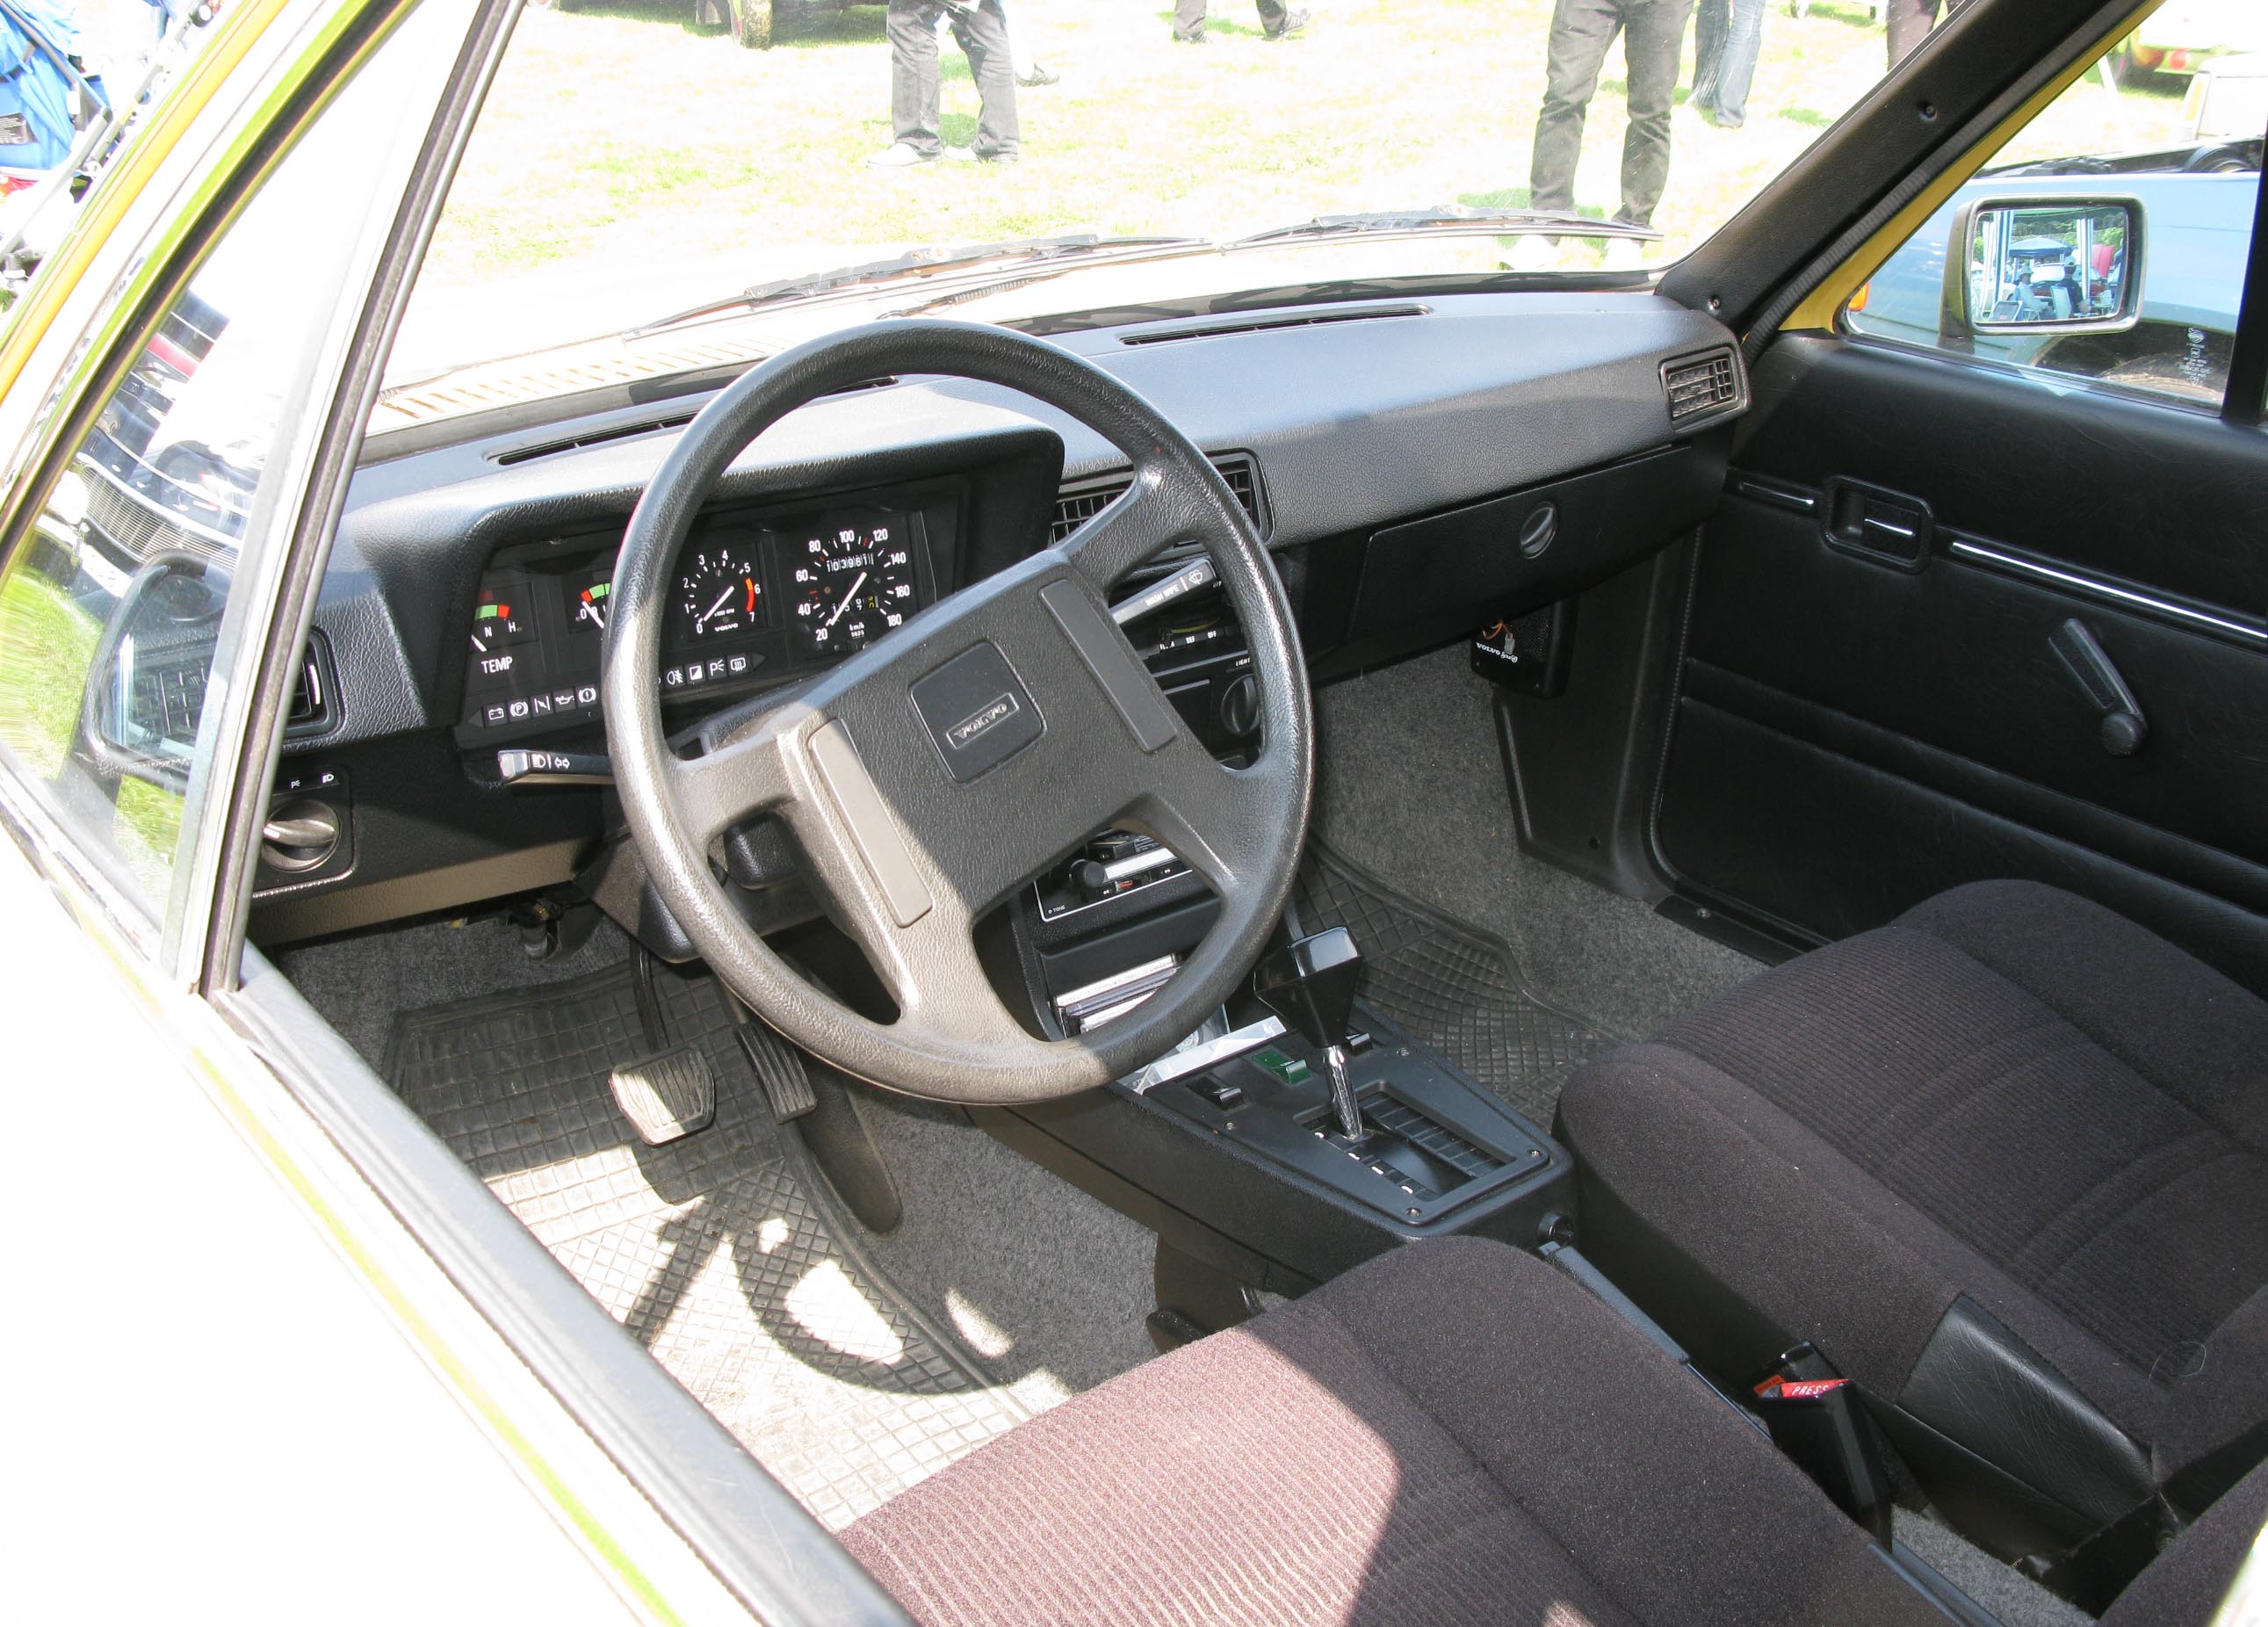 File:Volvo 343 dash.jpg